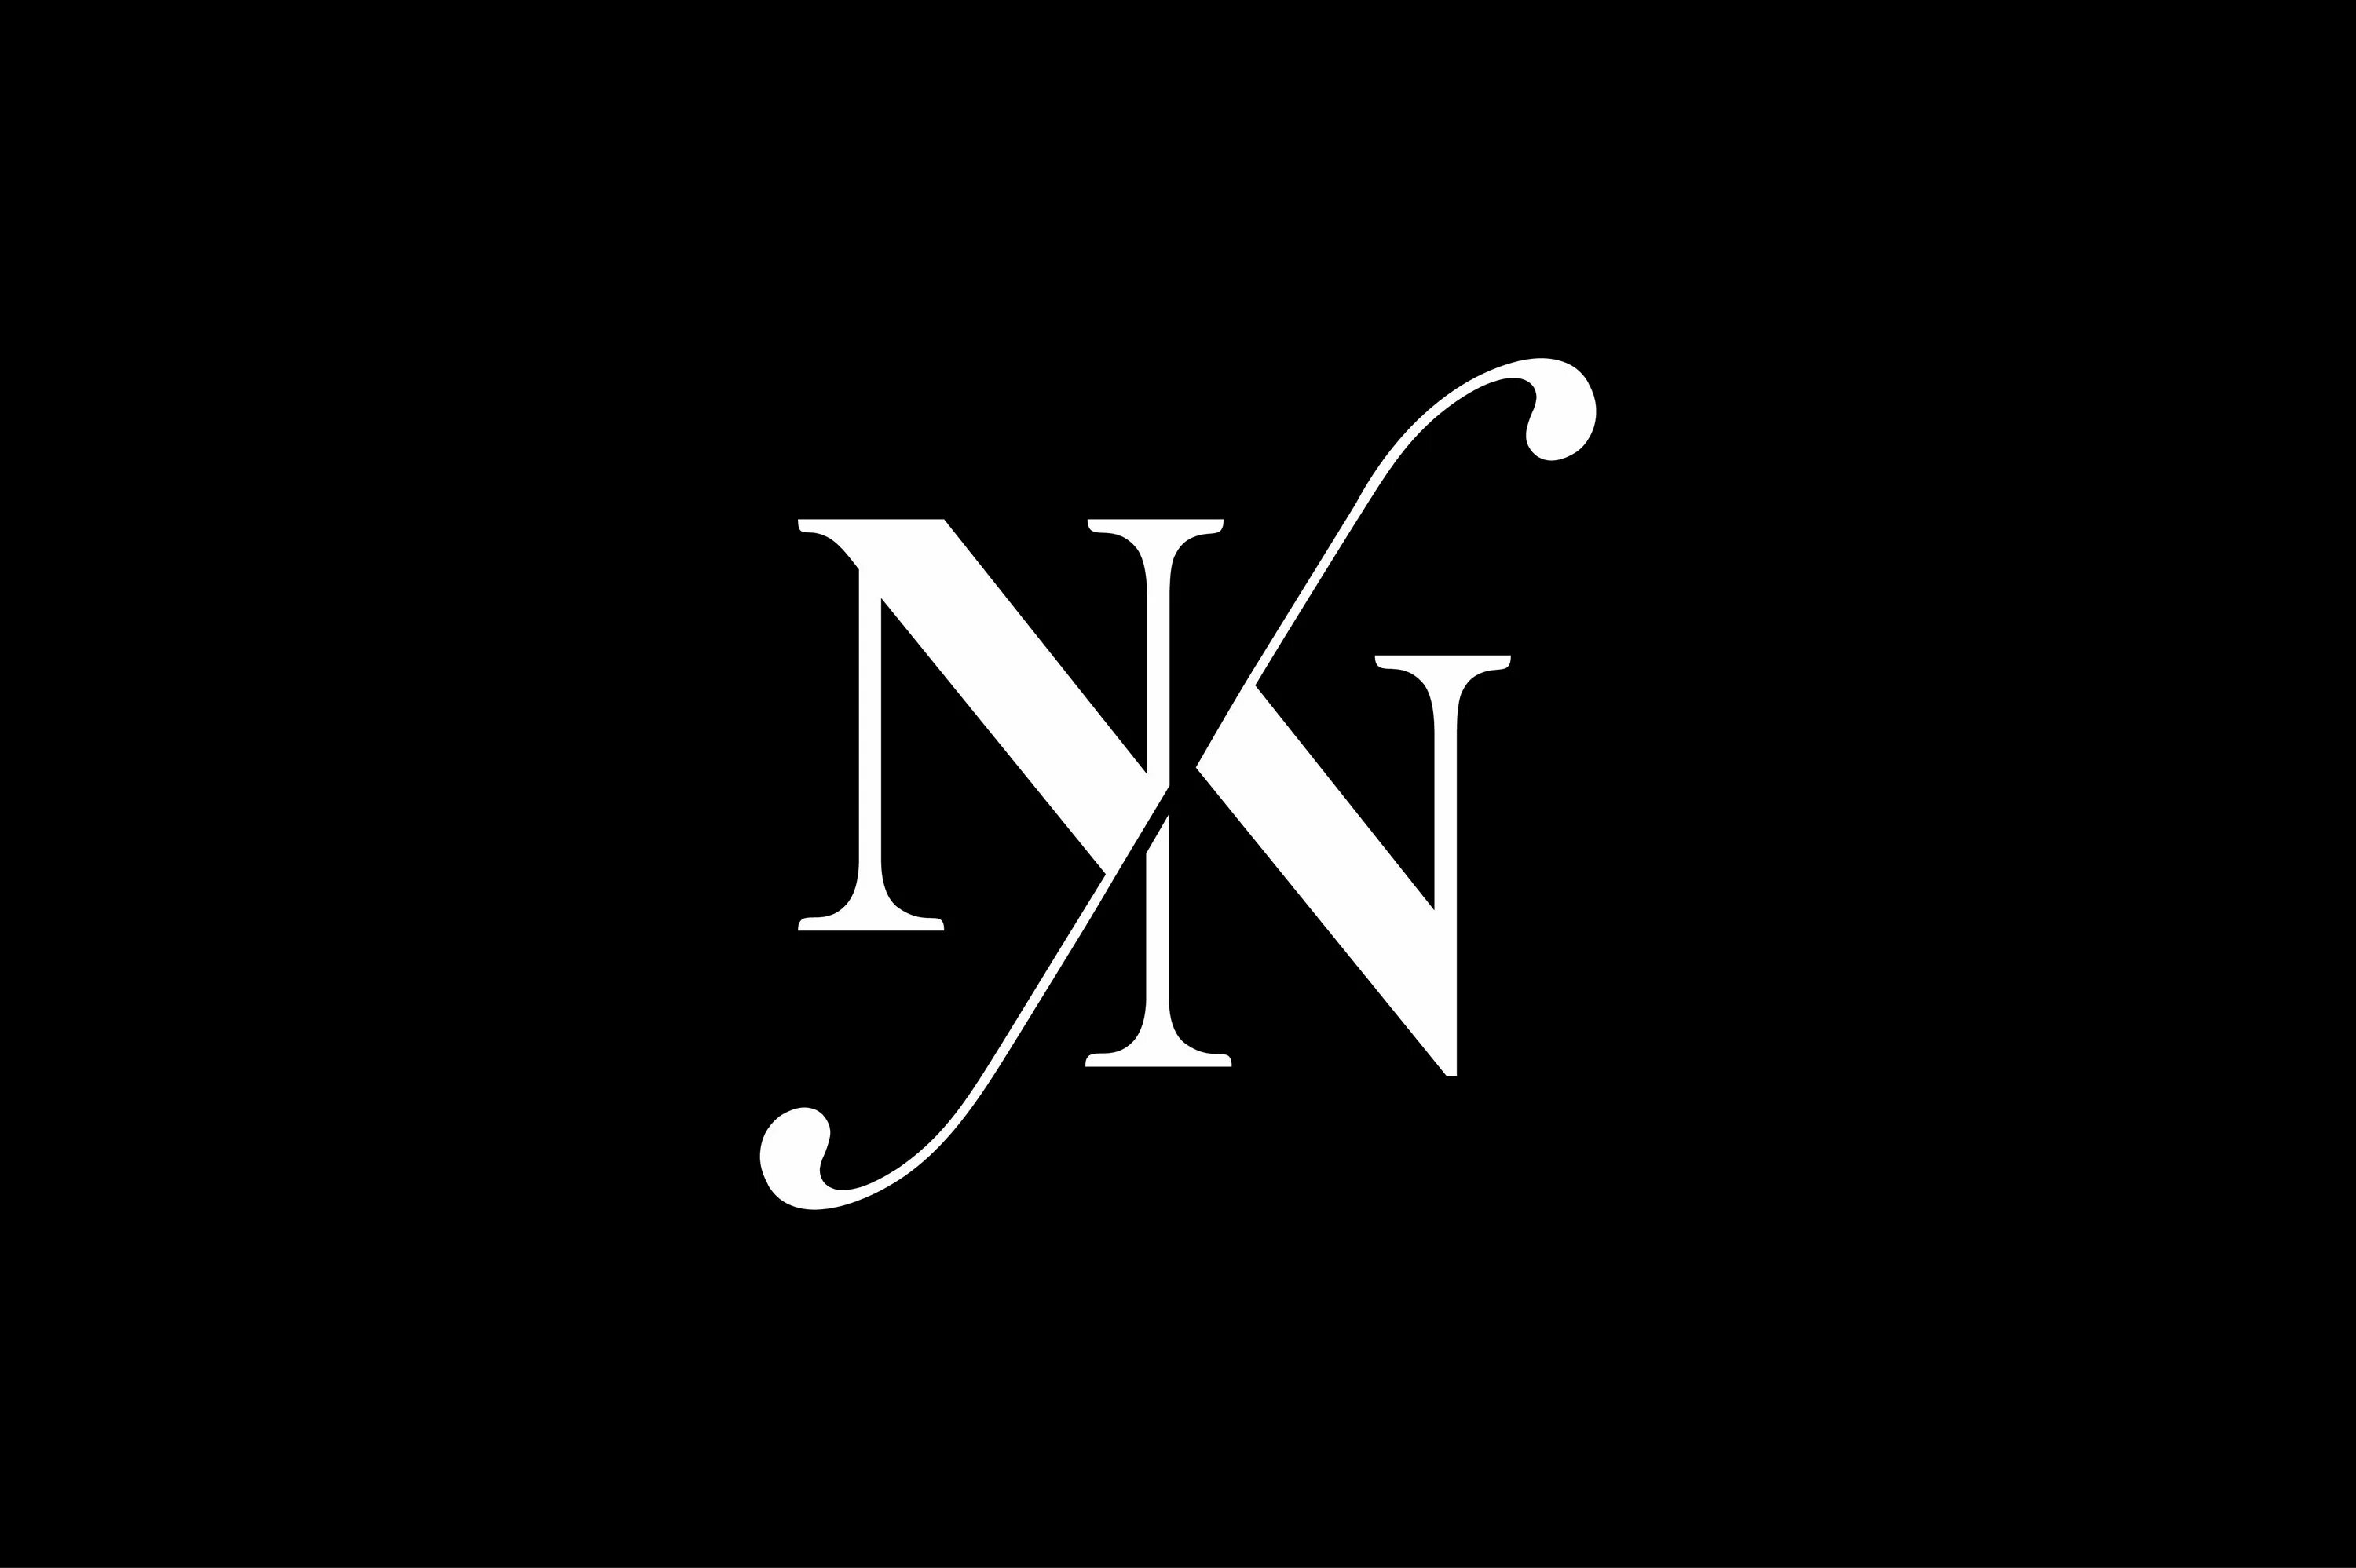 Логотип NV. Монограмма NV. NV буквы. Логотип v.n.. Буквы берг